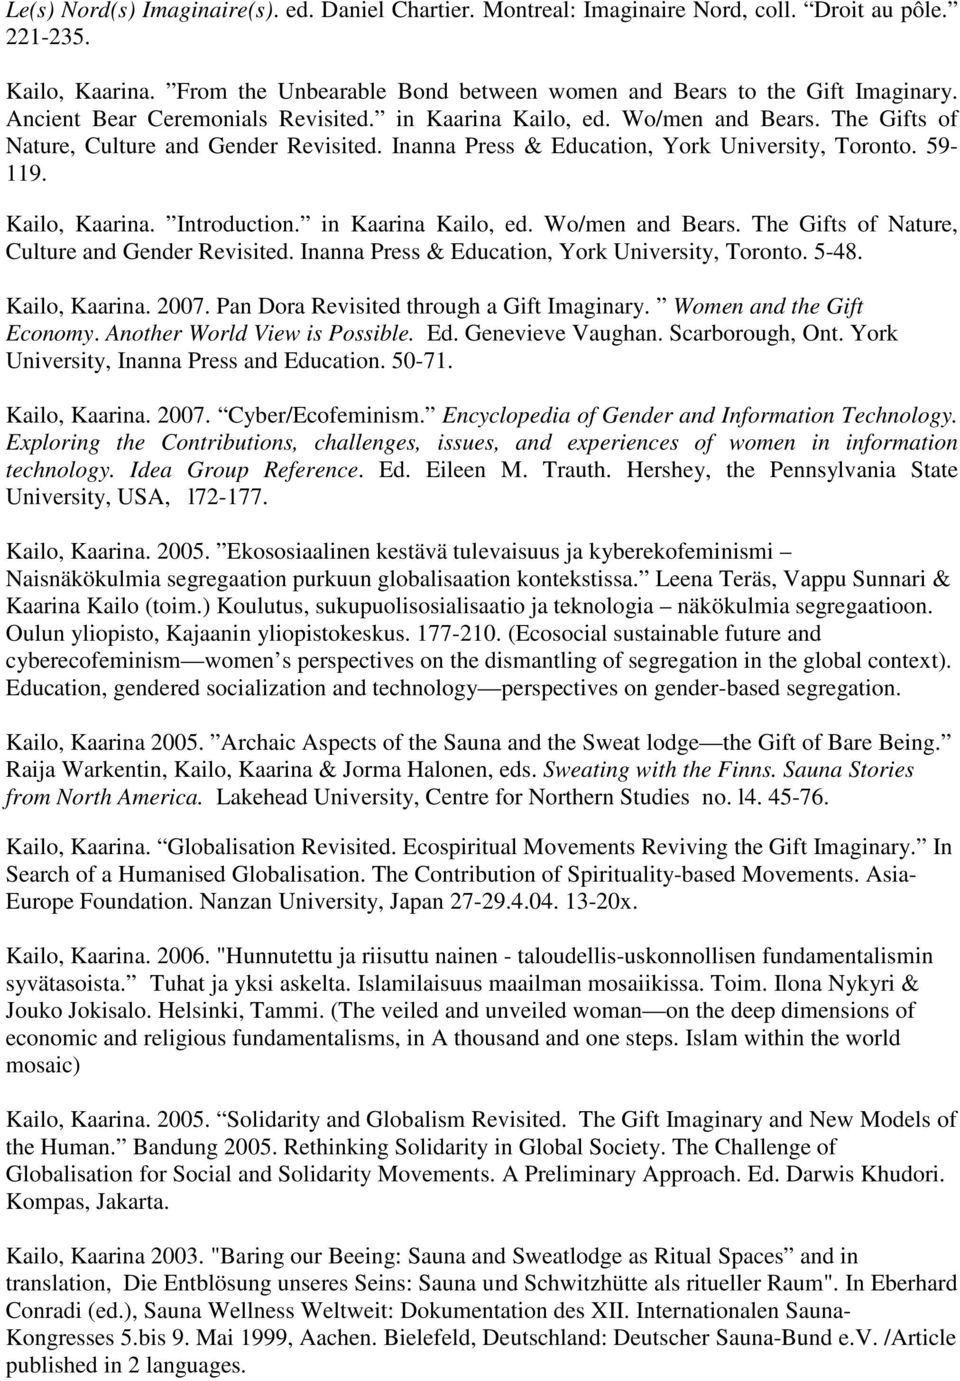 Kailo, Kaarina. Introduction. in Kaarina Kailo, ed. Wo/men and Bears. The Gifts of Nature, Culture and Gender Revisited. Inanna Press & Education, York University, Toronto. 5-48. Kailo, Kaarina. 2007.